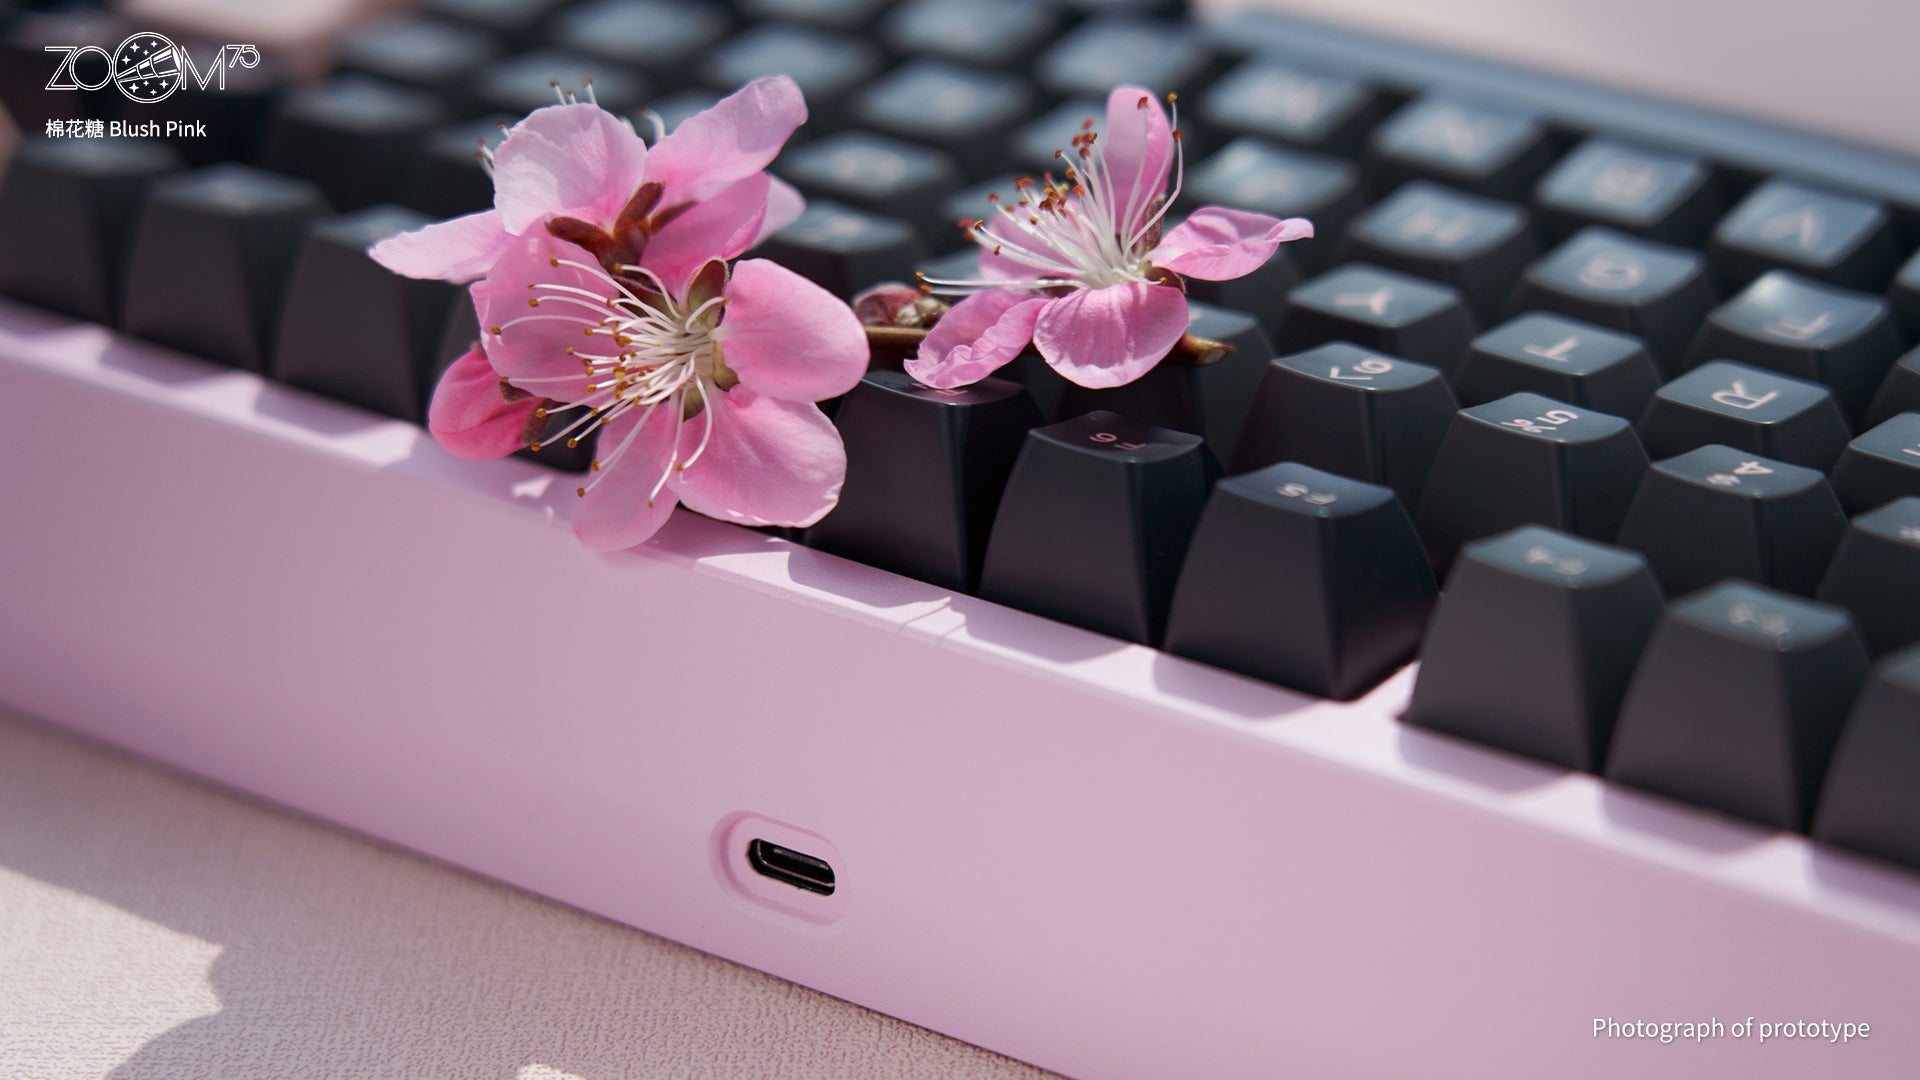 [Preventa] Meletrix Zoom75 Essential Edition (EE) - Barebones Keyboard Kit - Blush Pink